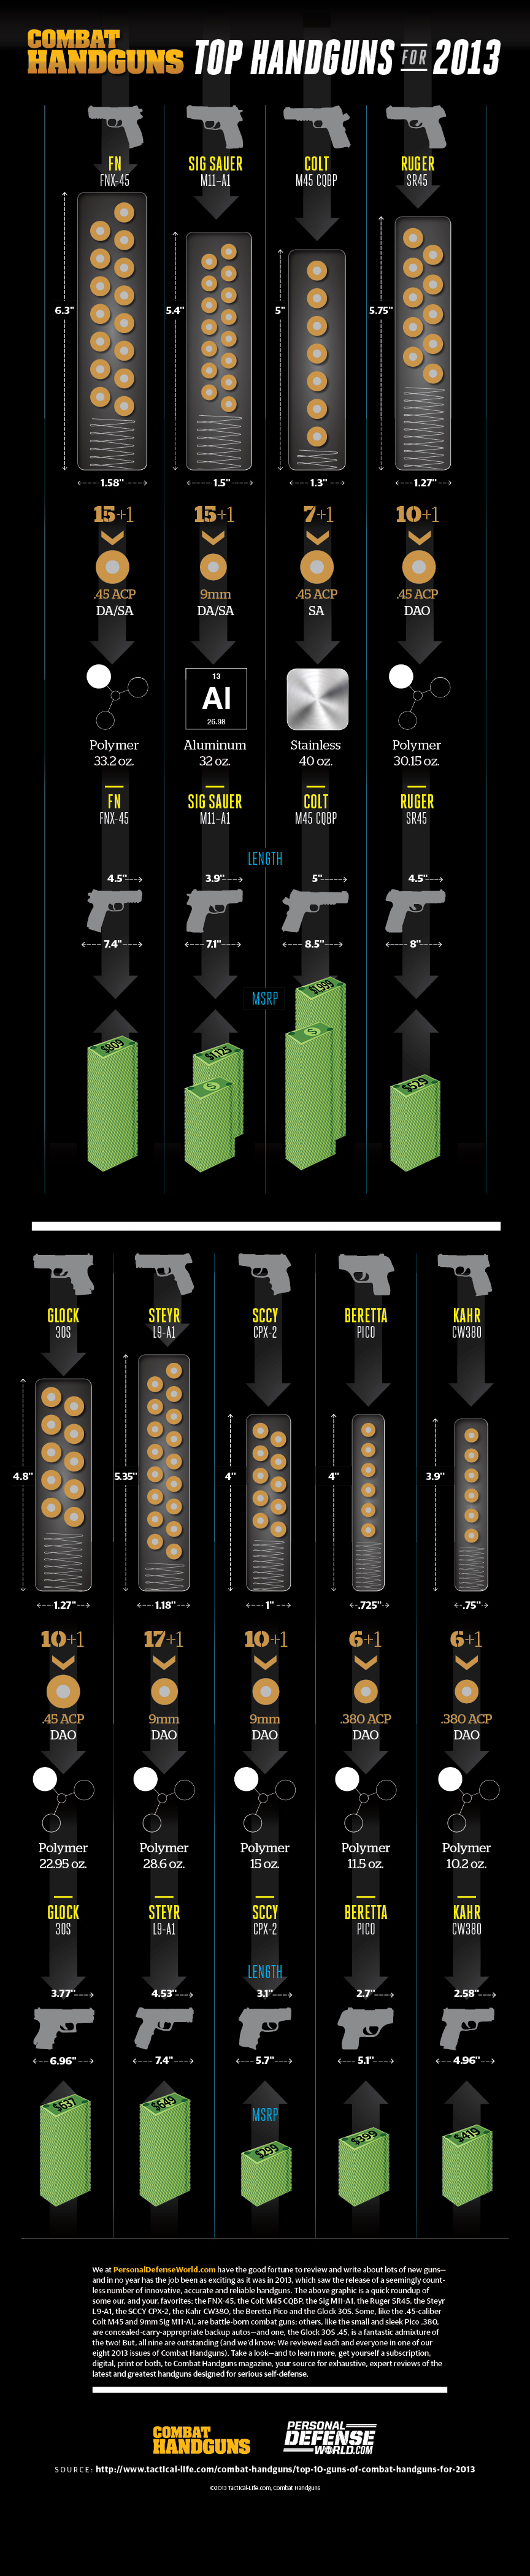 Top Handguns for 2013 Infographic